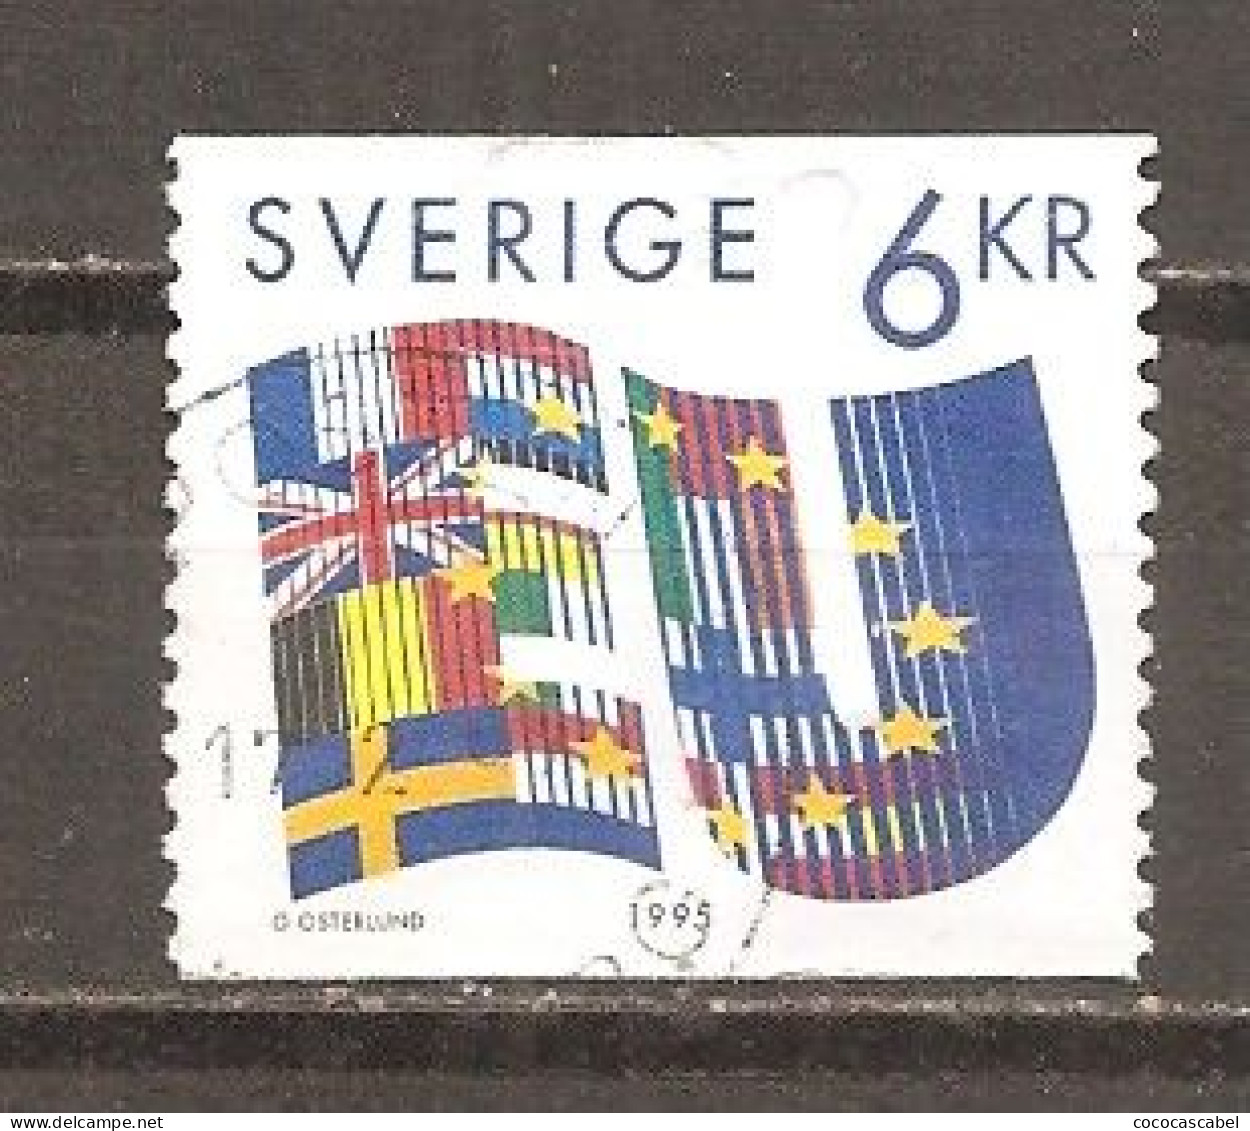 Suecia-Sweden Nº Yvert  1862 (usado) (o) - Used Stamps